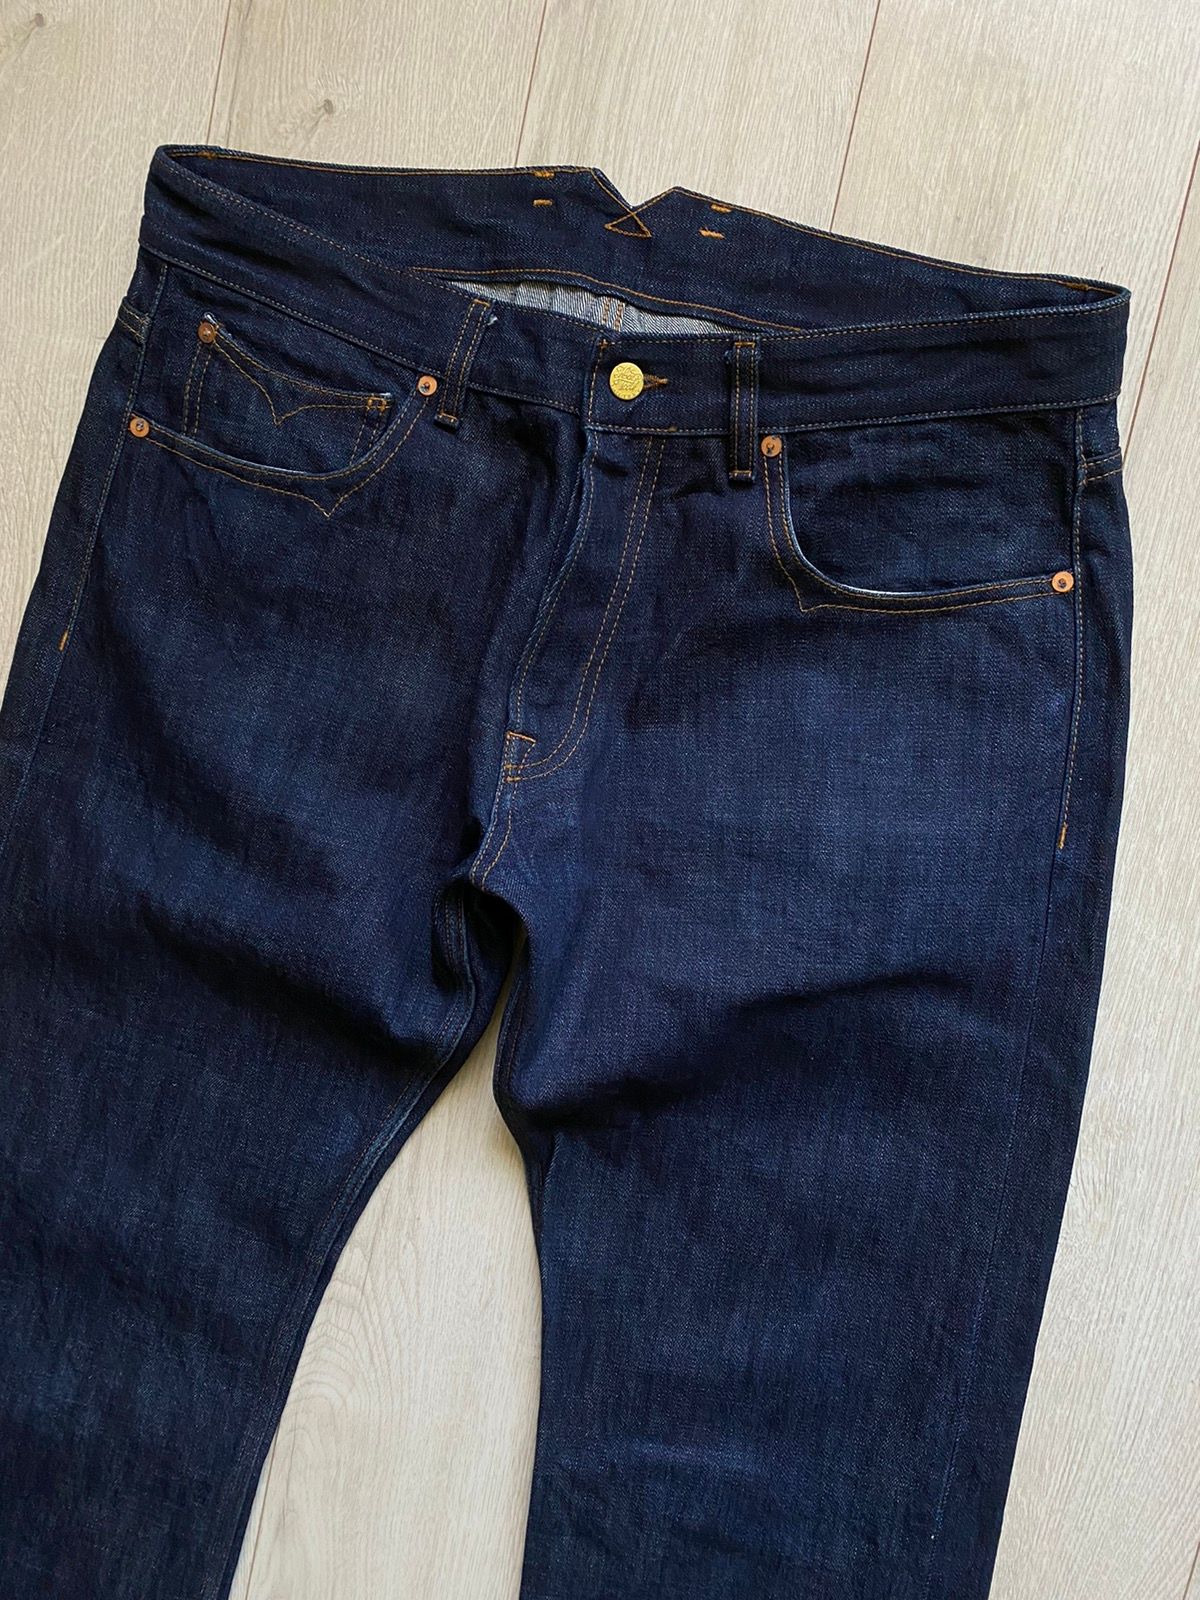 Italian Designers Hens Teeth jeans selvedge Italian denim original 14,3 Oz Size US 36 / EU 52 - 3 Thumbnail